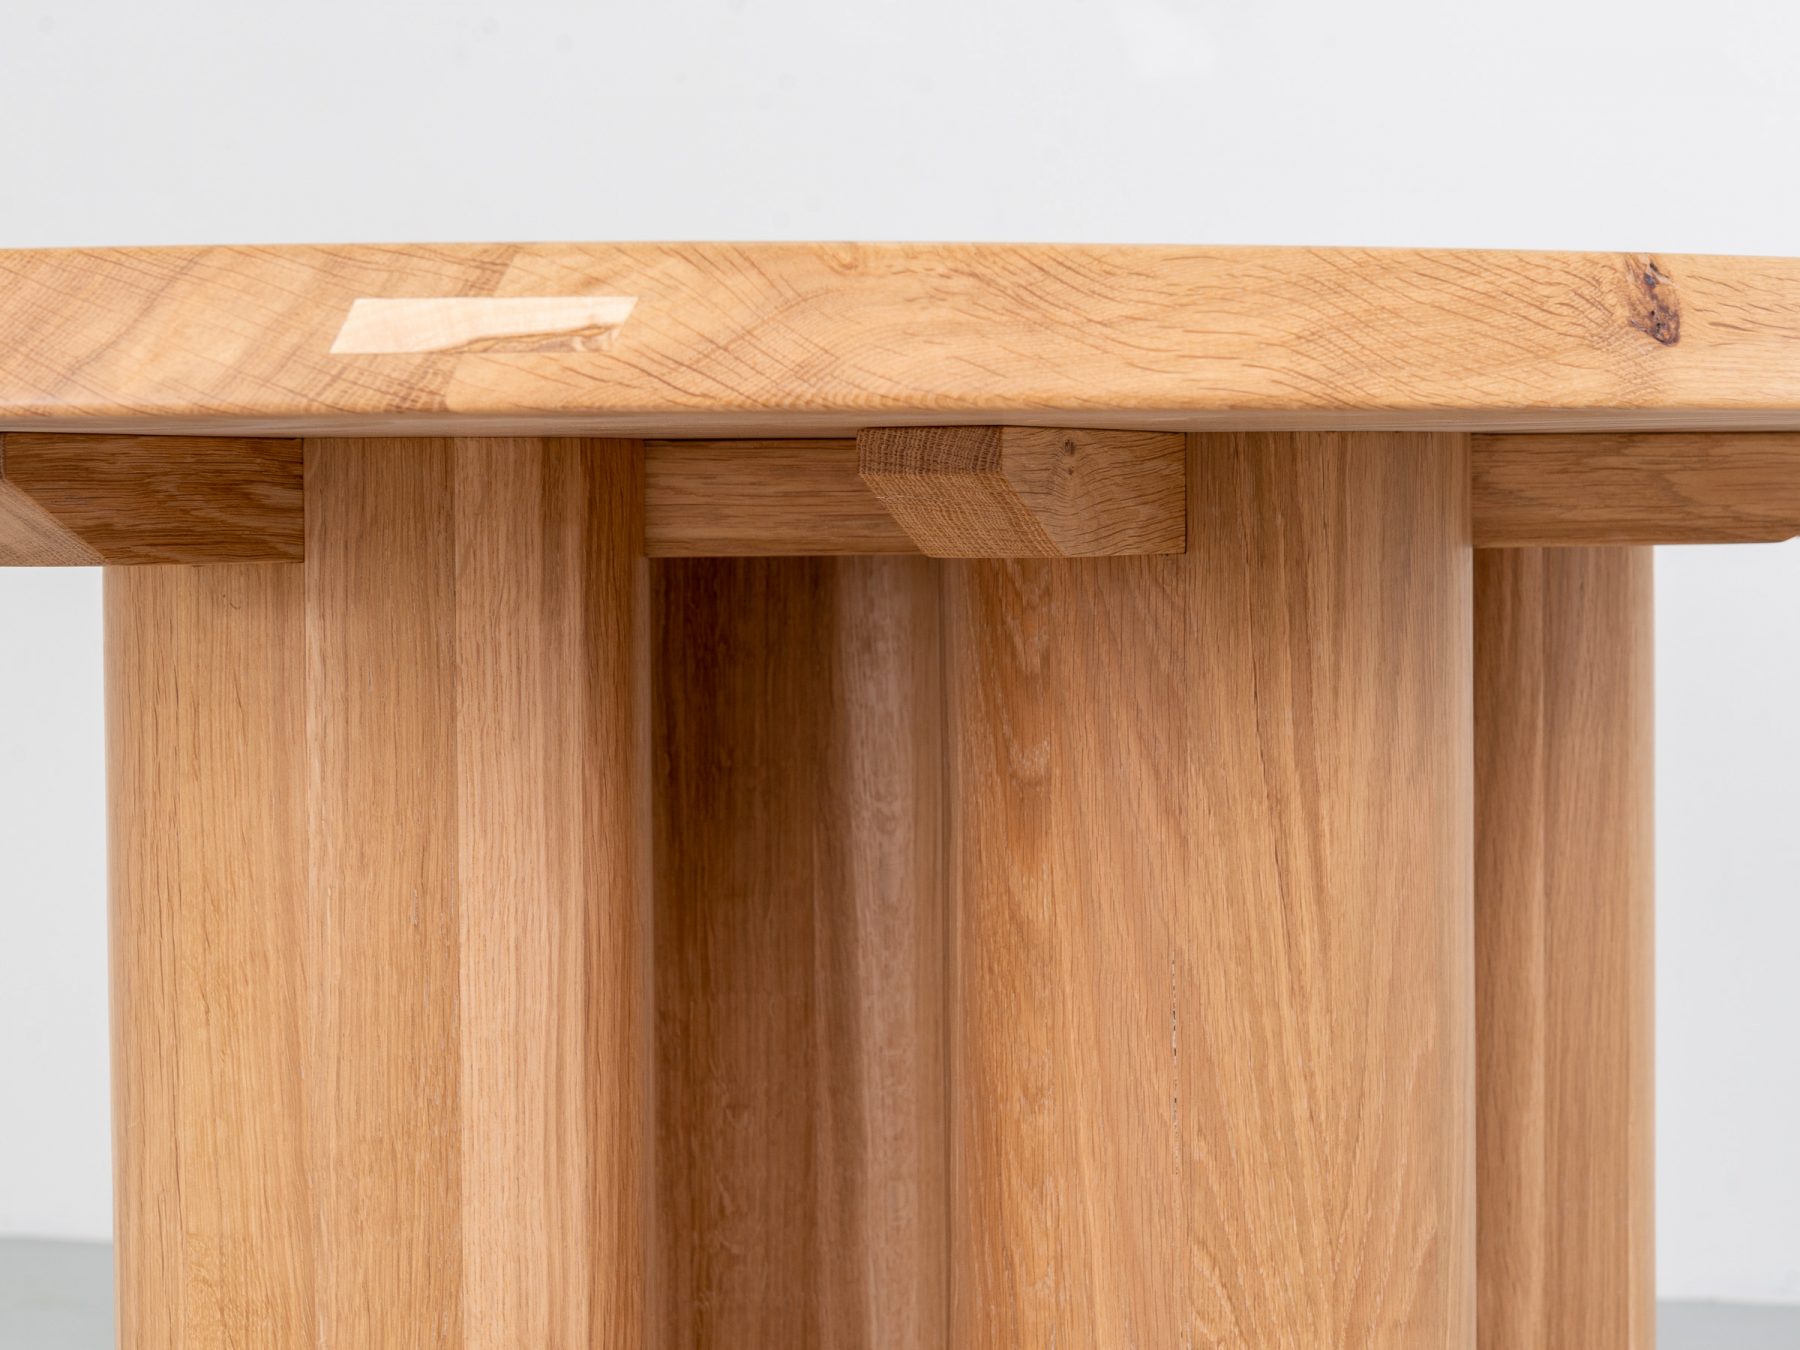 Jan Hendzel Studio oval staved table WEB-9